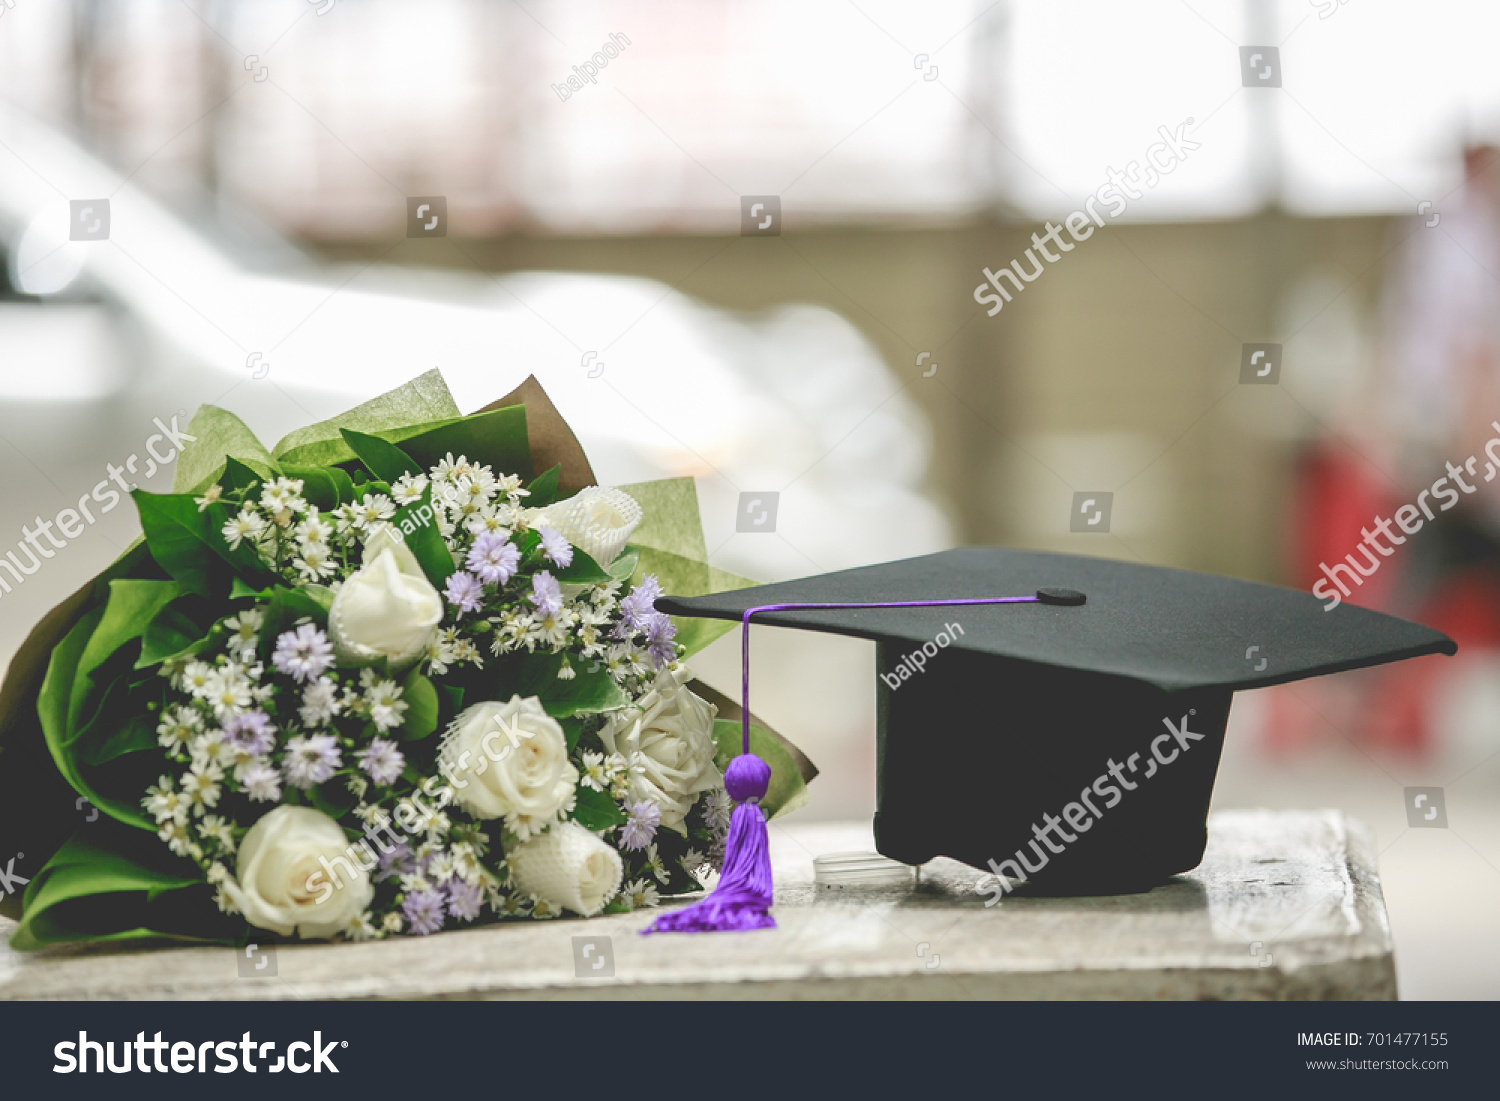 Graduation cap and beautiful flower #701477155